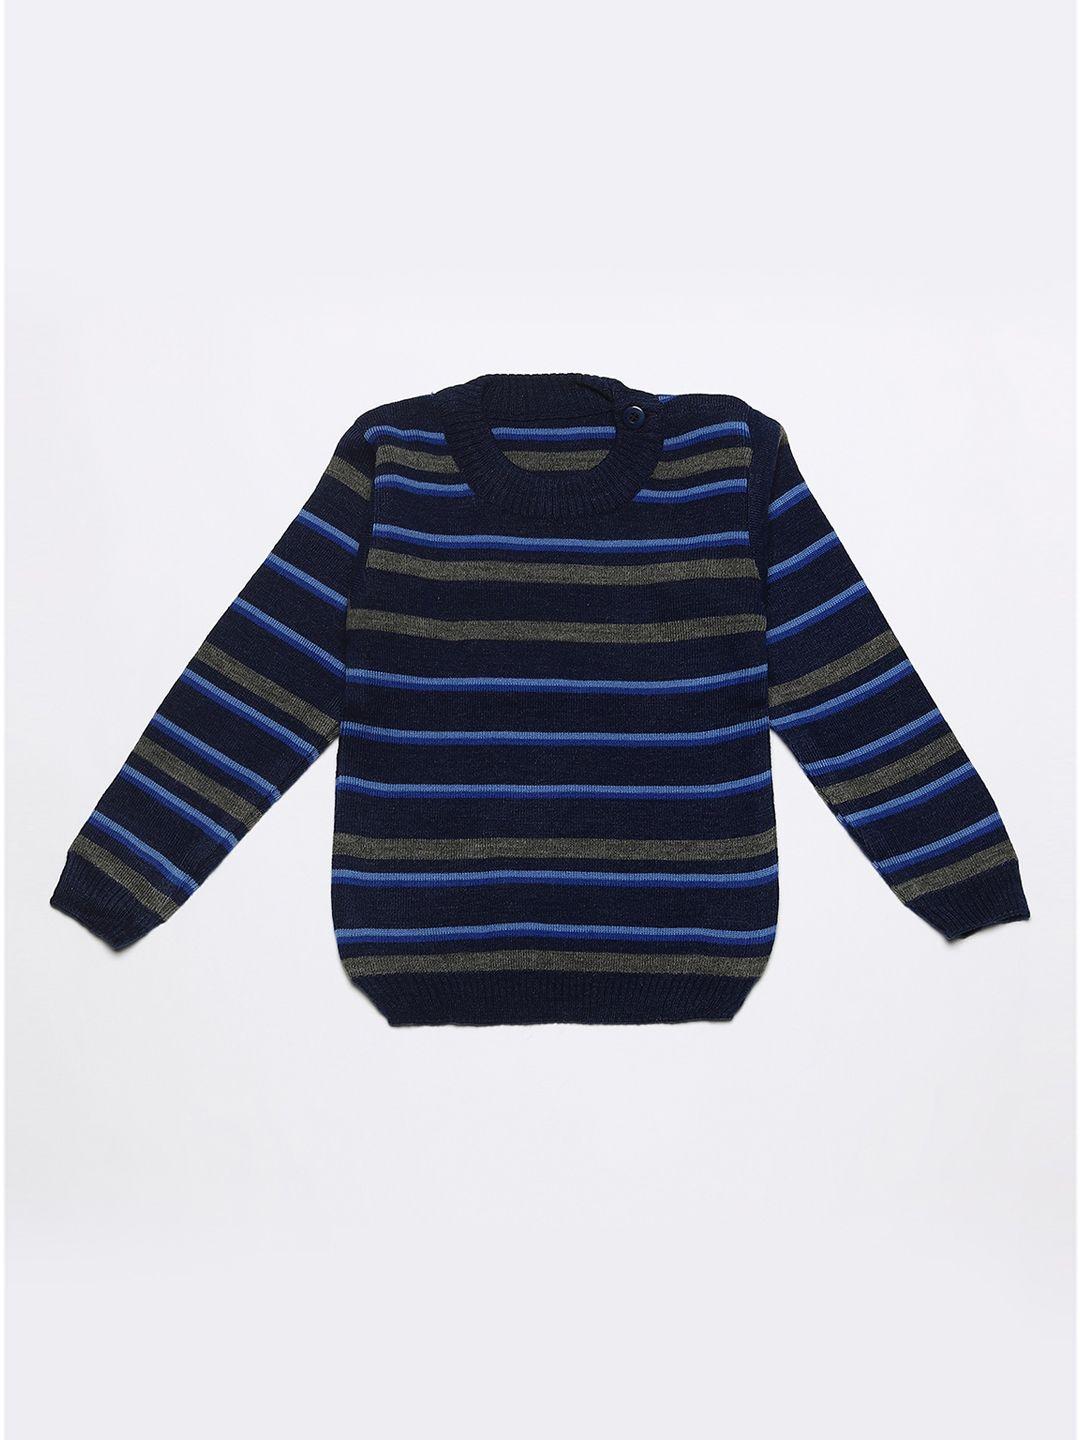 fabnest unisex kids navy blue & grey striped acrylic pullover sweater